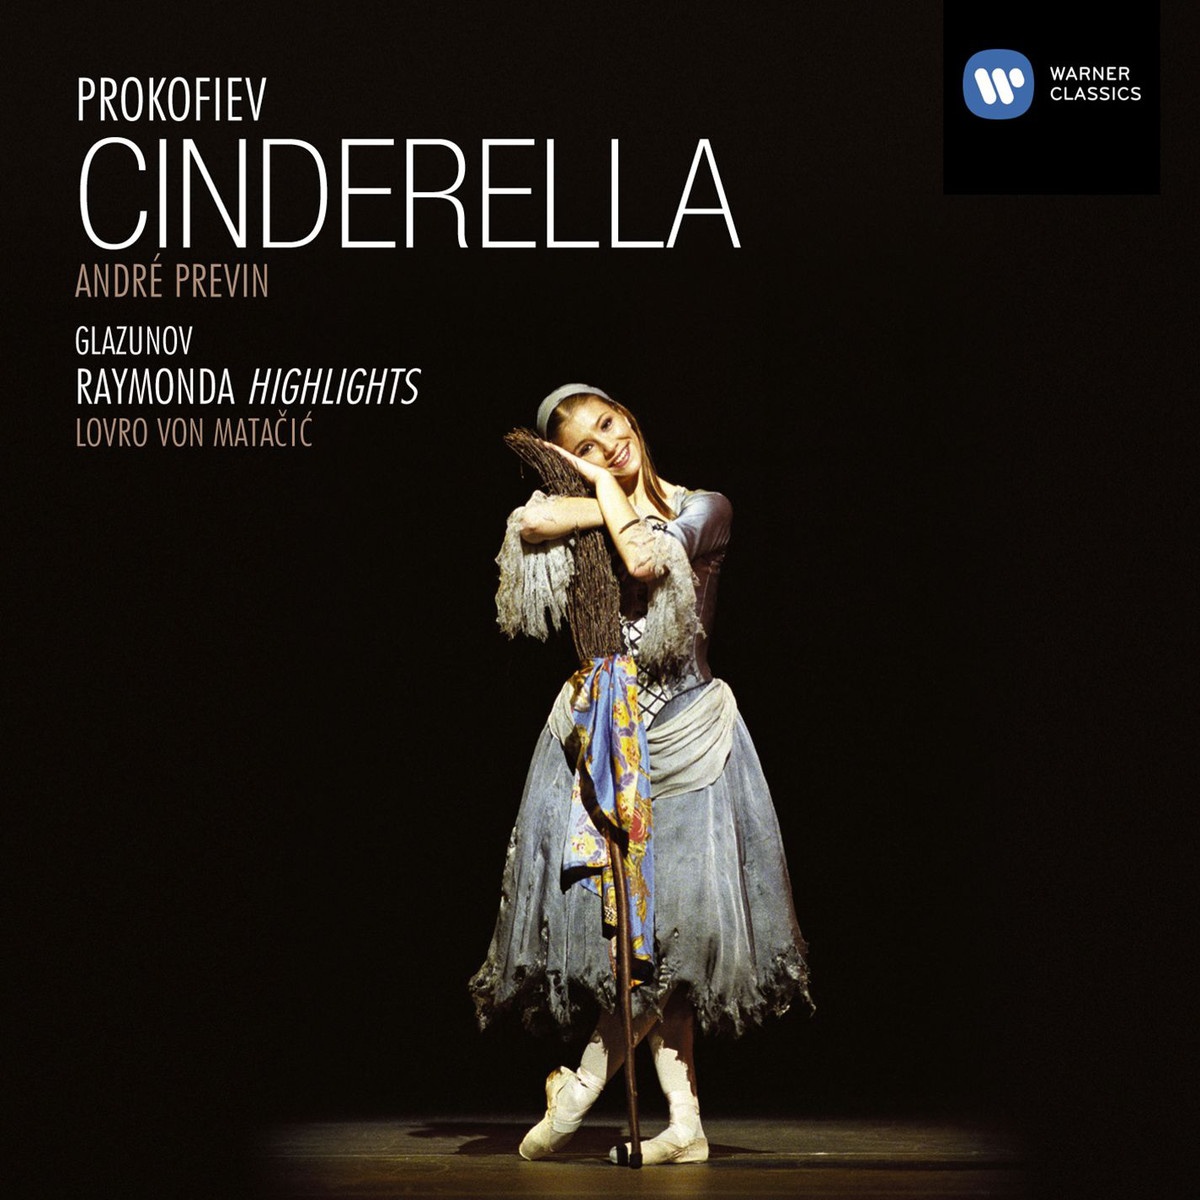 Cinderella  - Ballet in three acts Op. 87, Act II: Midnight (Allegro moderato)